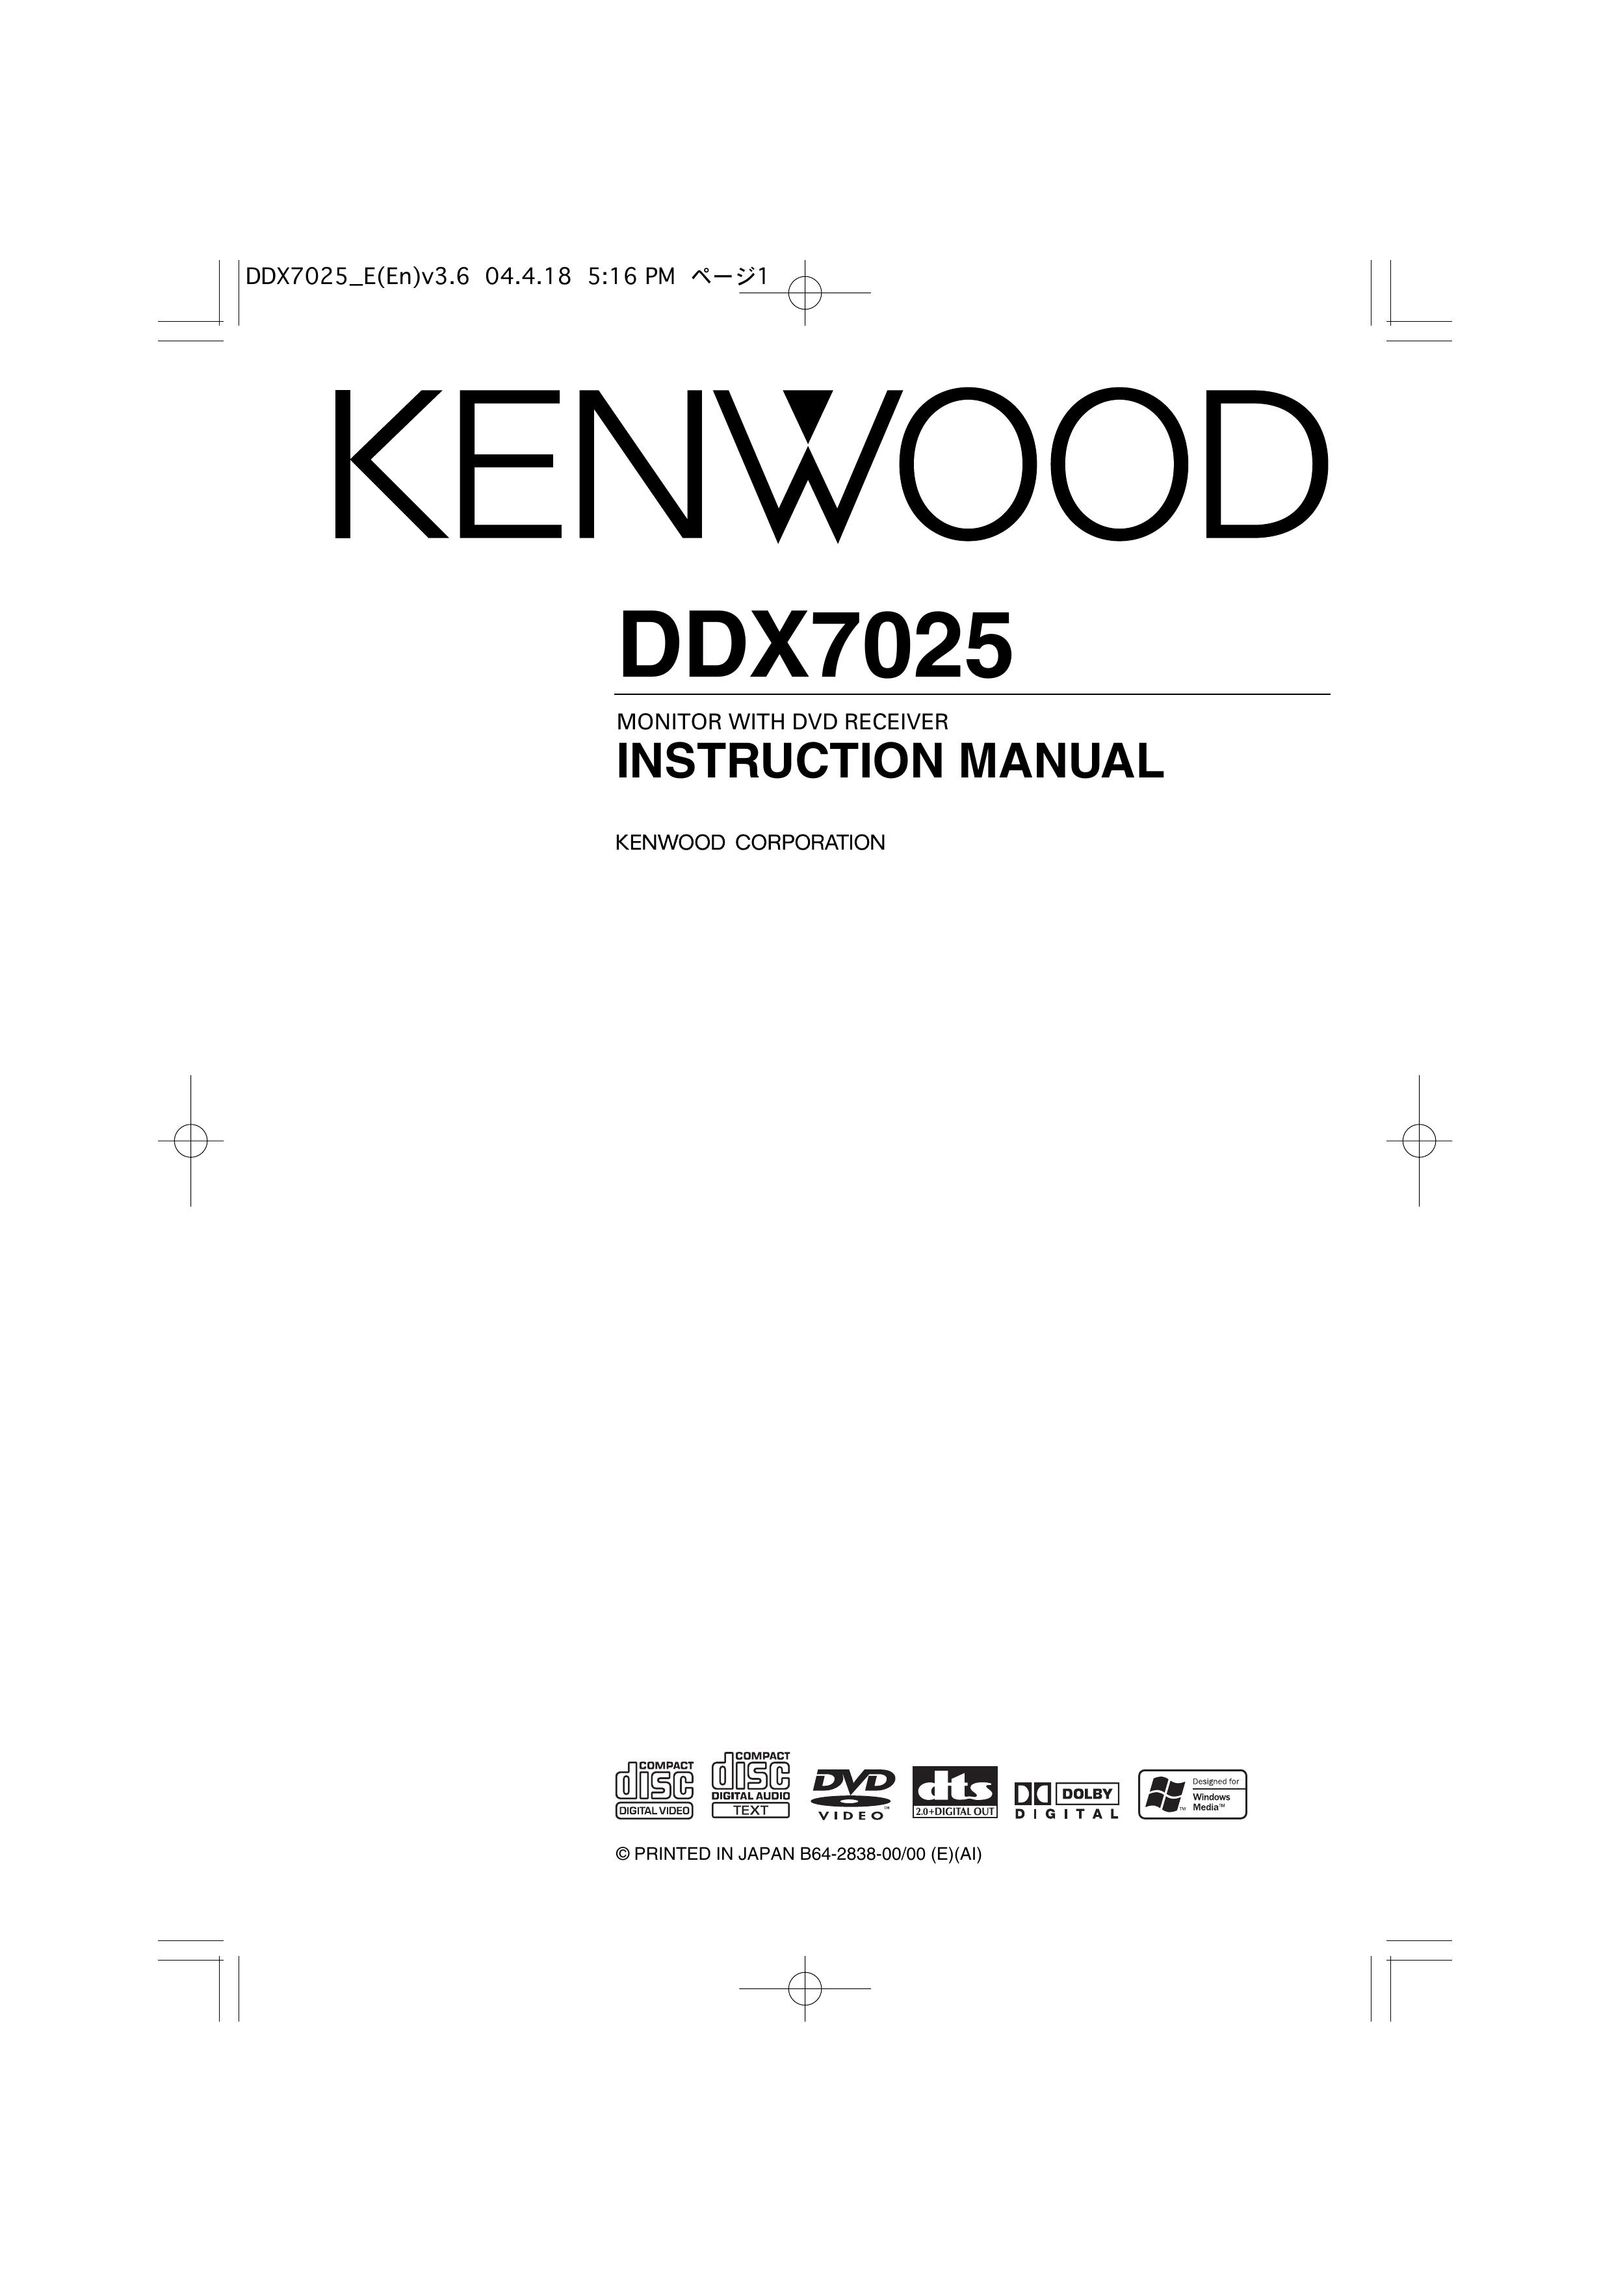 Kenwood DDX7025 Car Video System User Manual